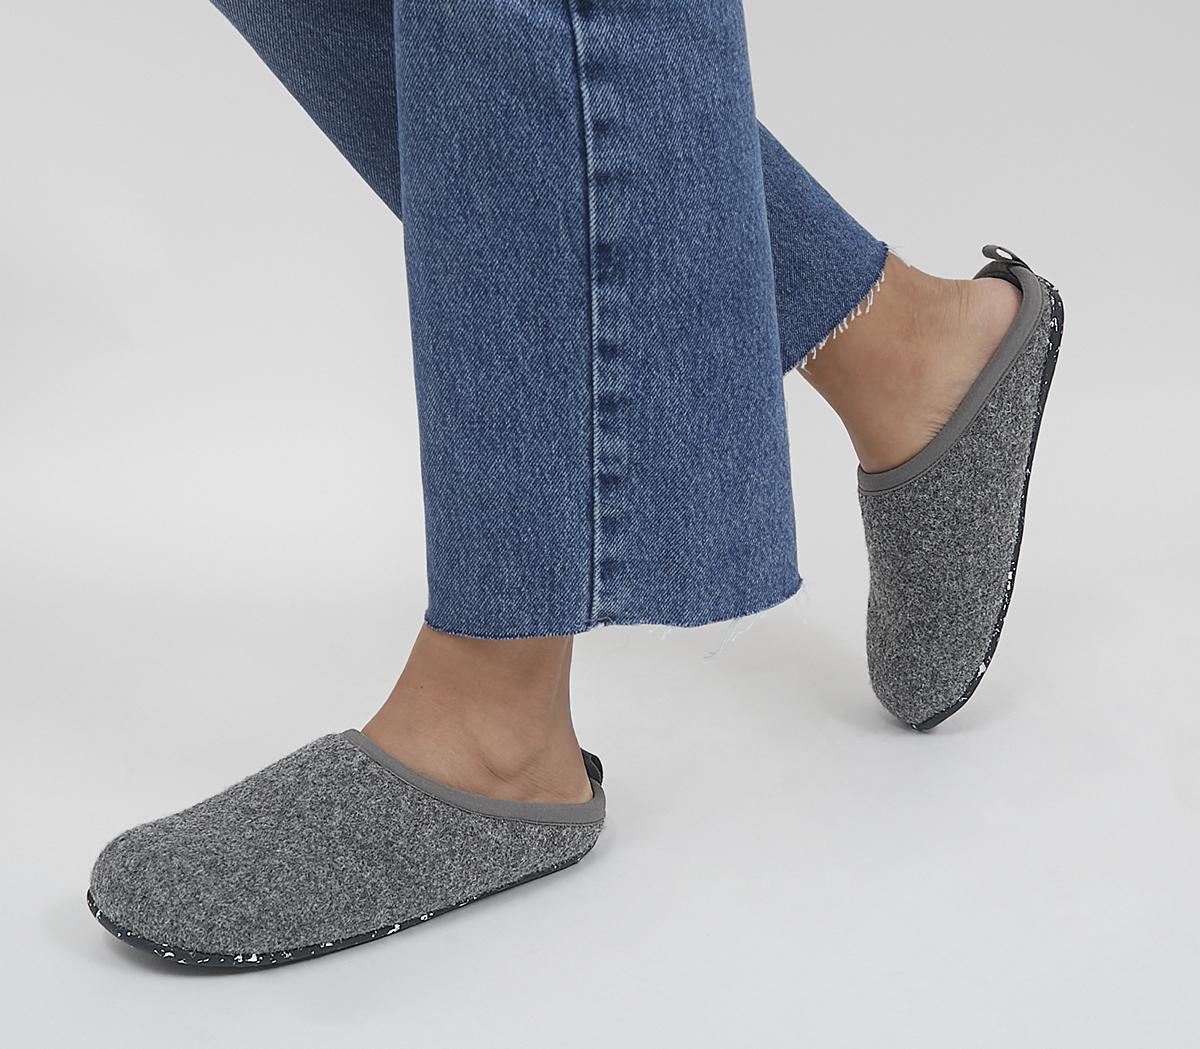 Gentleman Tekstforfatter Landbrug Camper Wabi Slippers Pastel Grey - Flat Shoes for Women